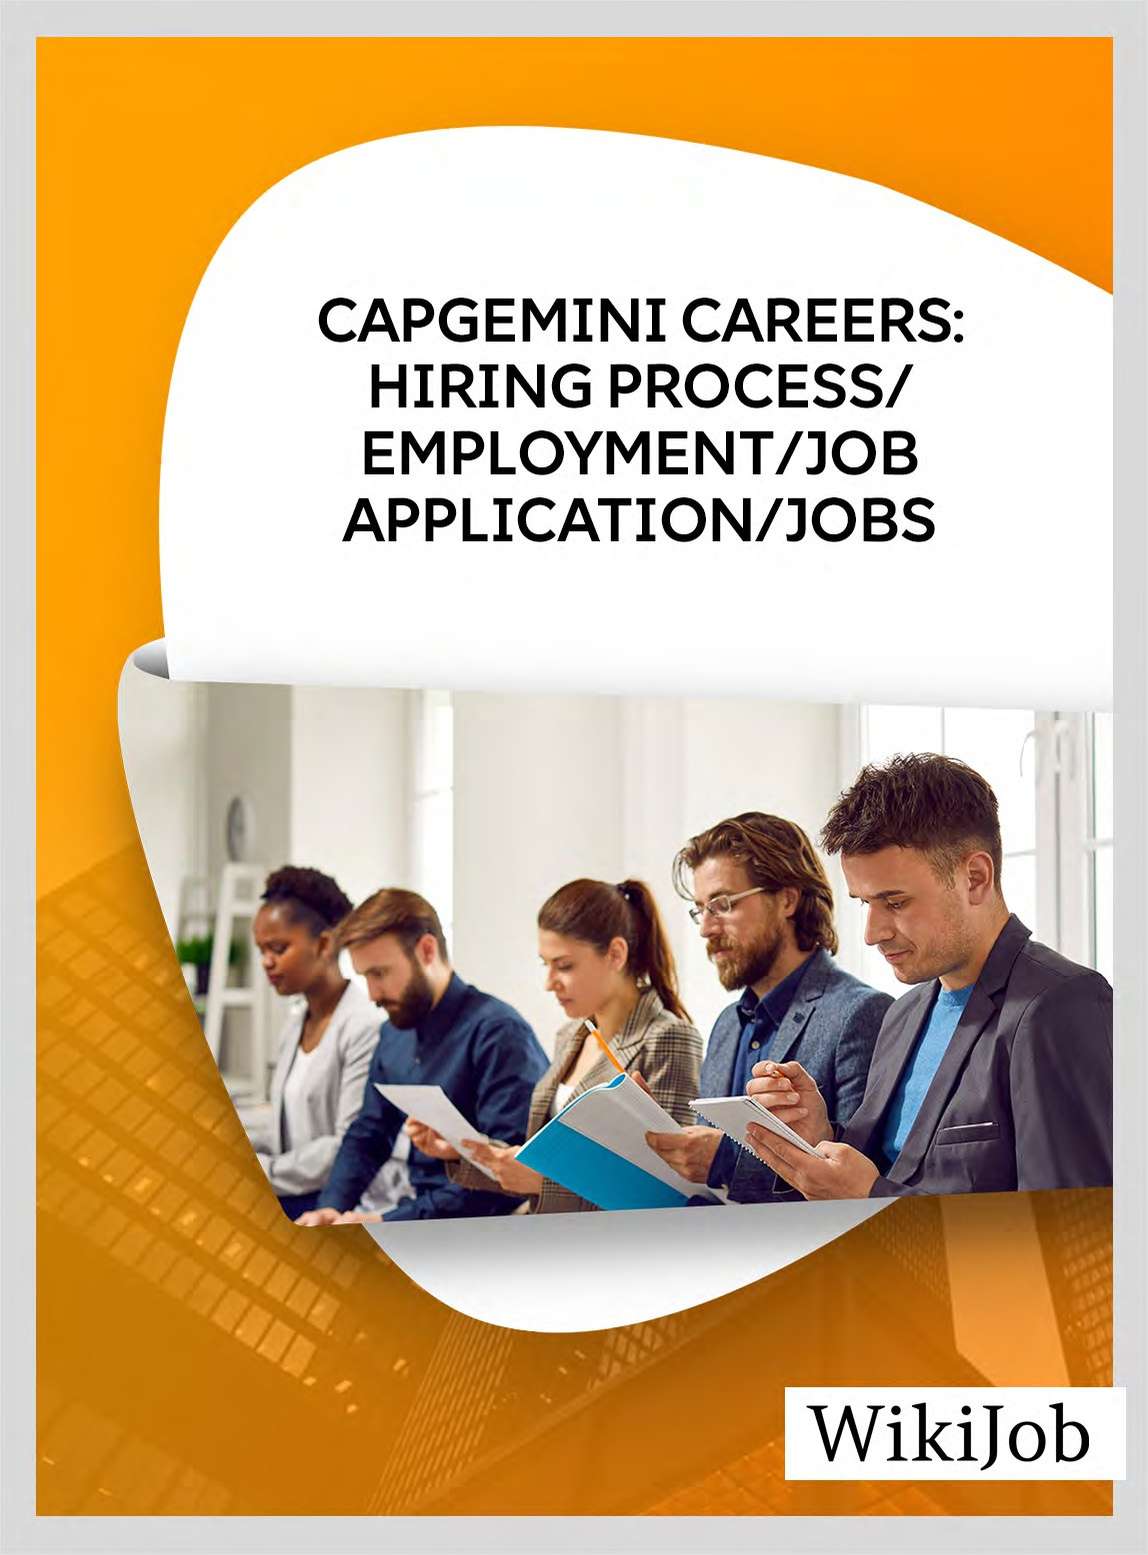 Capgemini Careers: Hiring Process/Employment/Job Application/Jobs